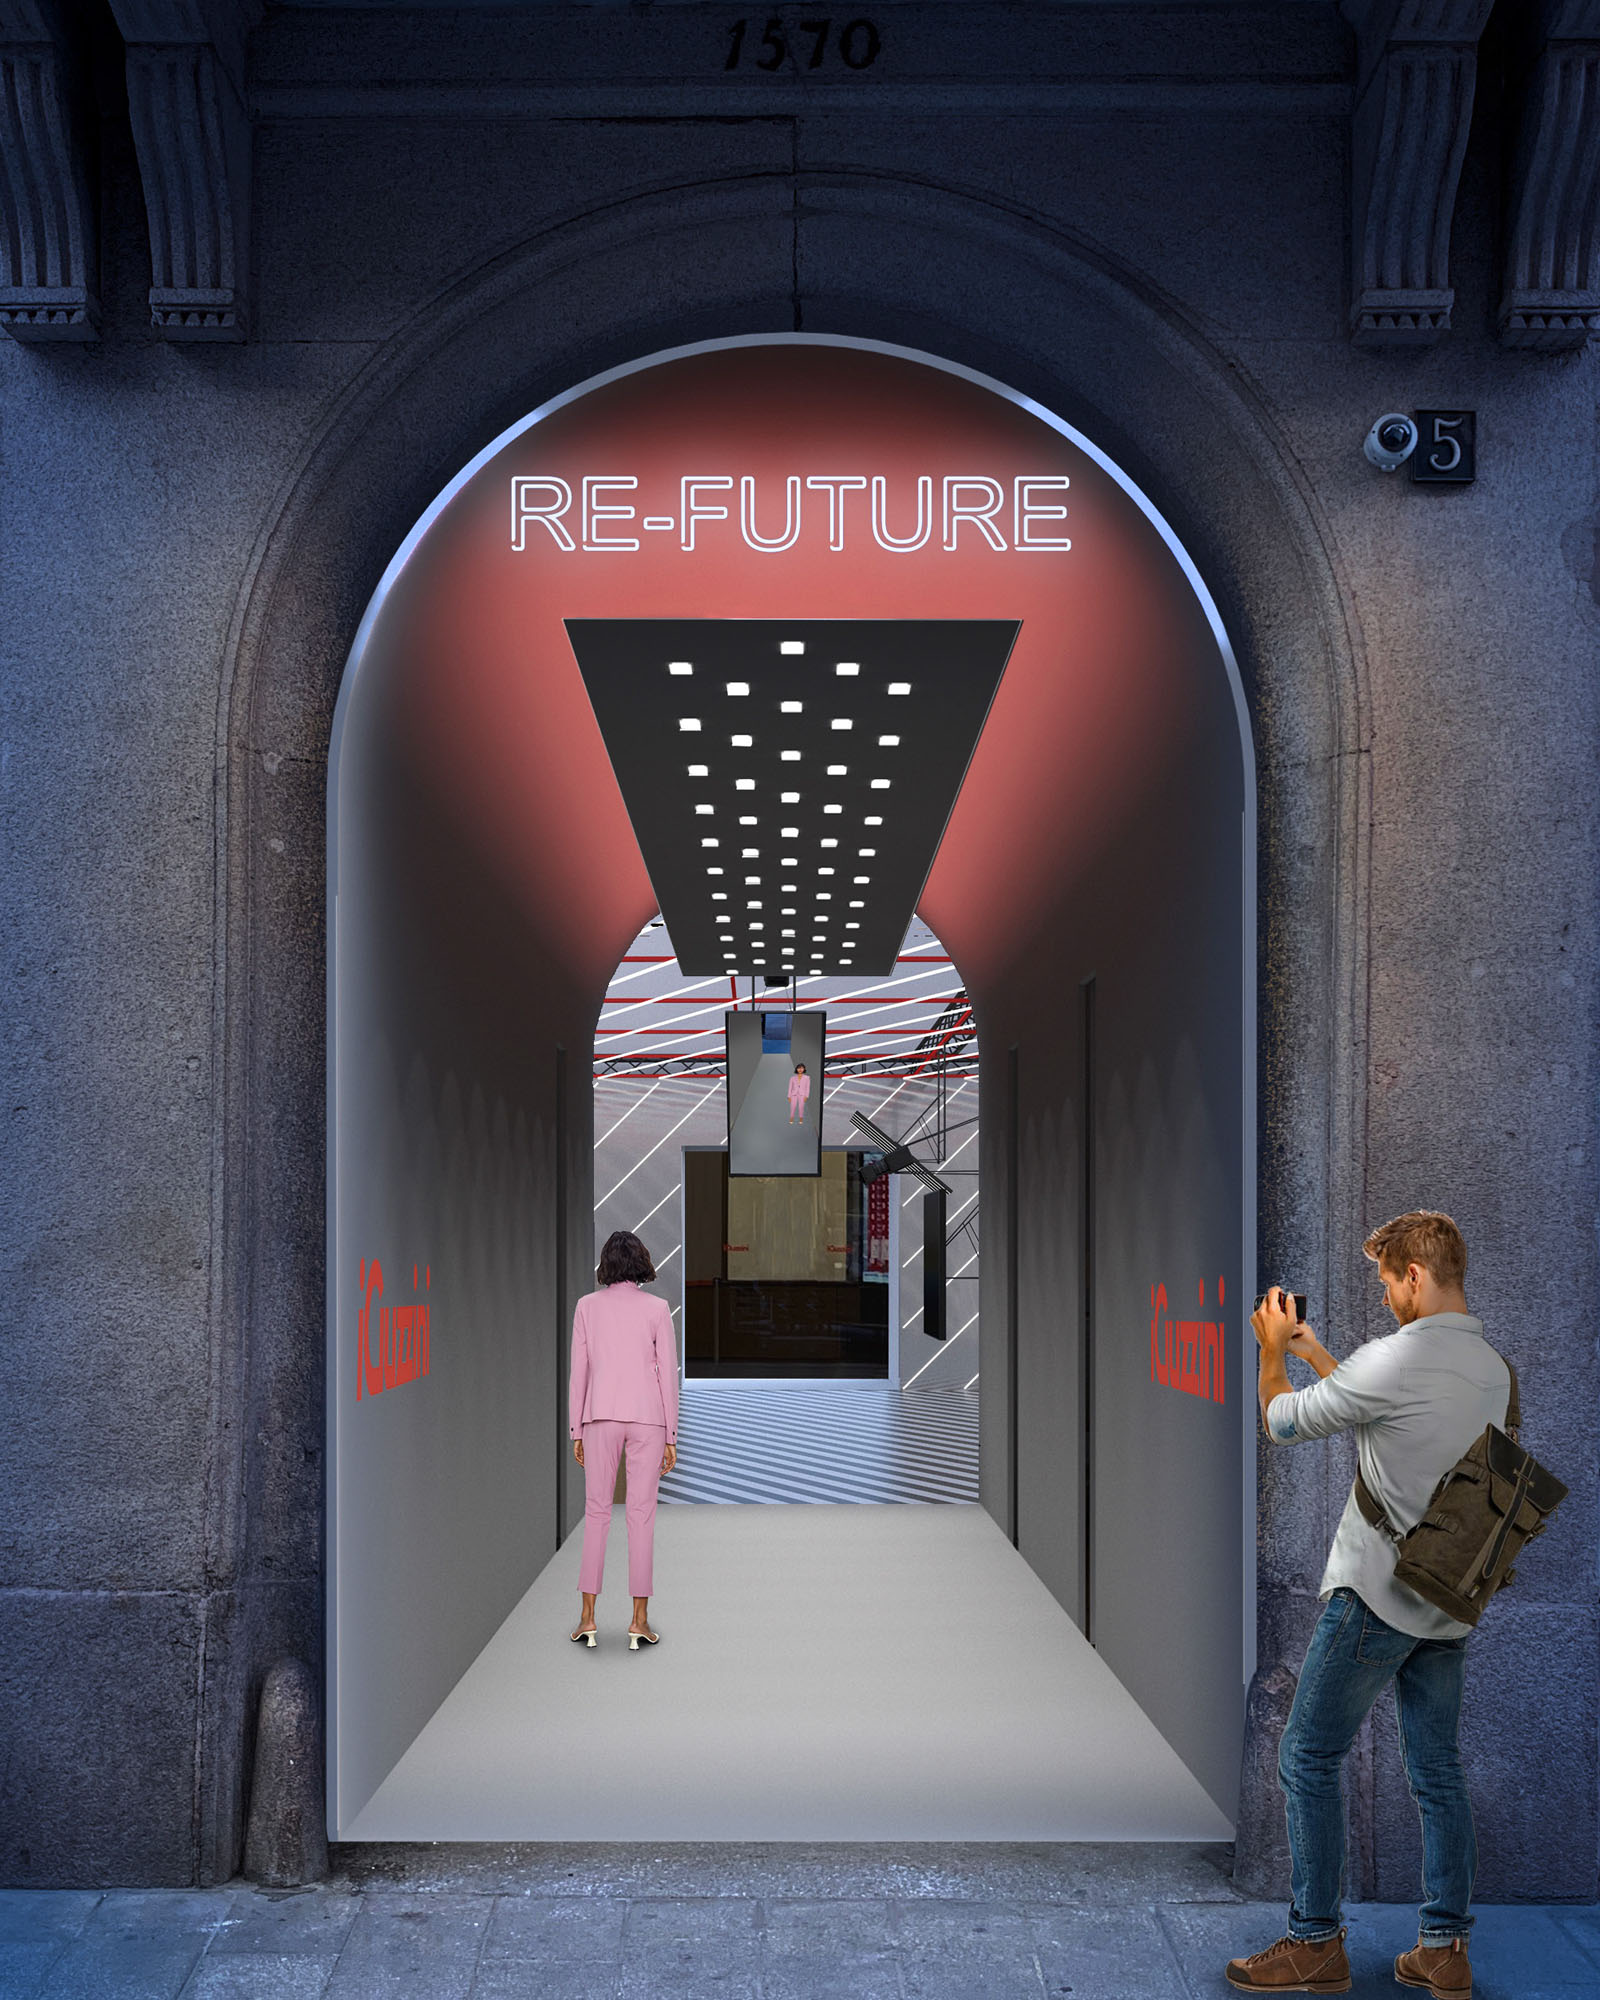 iGuzzini @ The Light Gate | RE-FUTURE